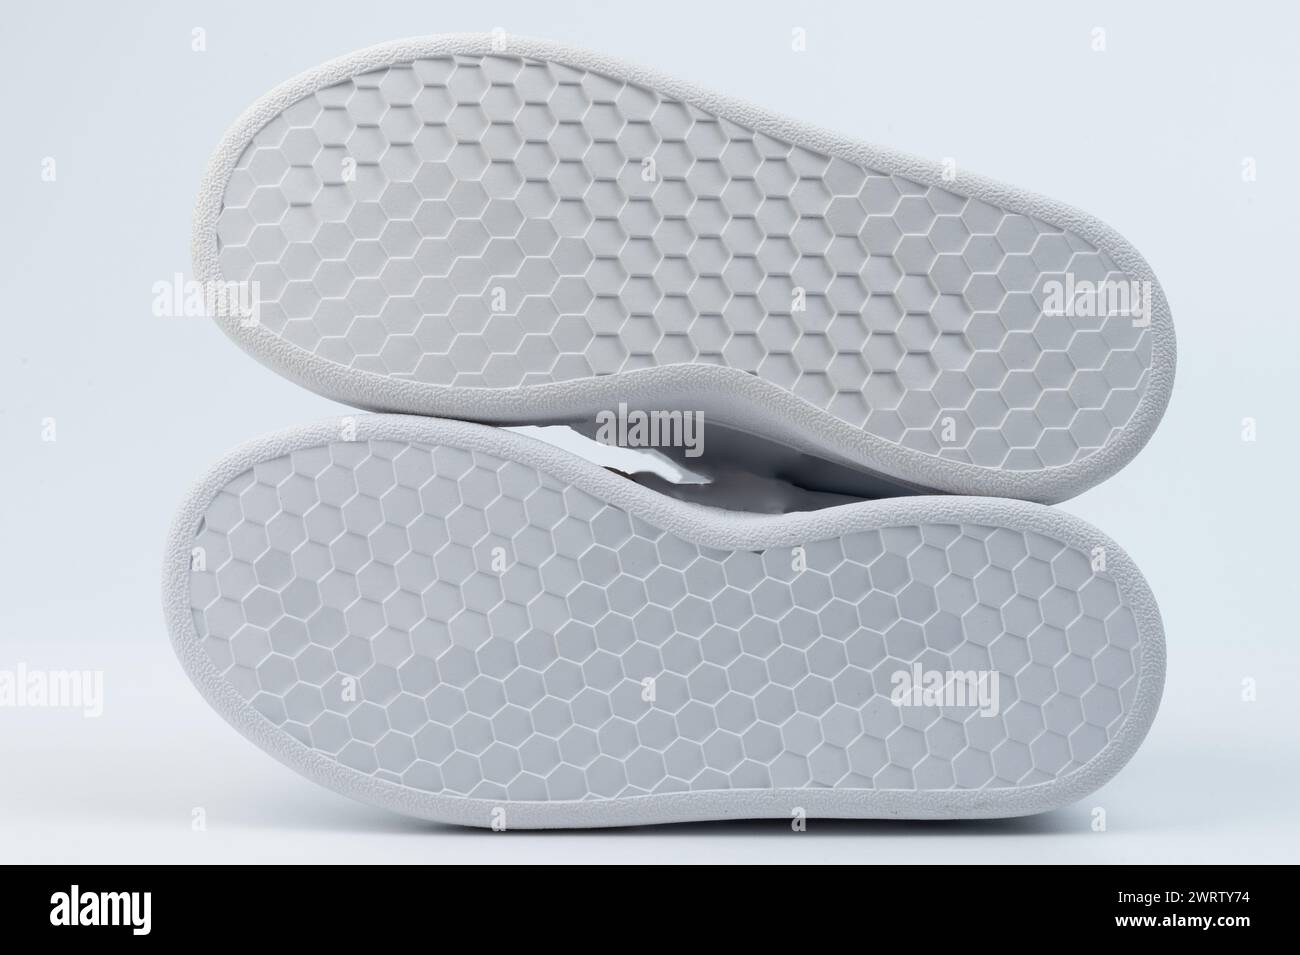 White rubber shoe bottom sole isolated on studio background Stock Photo